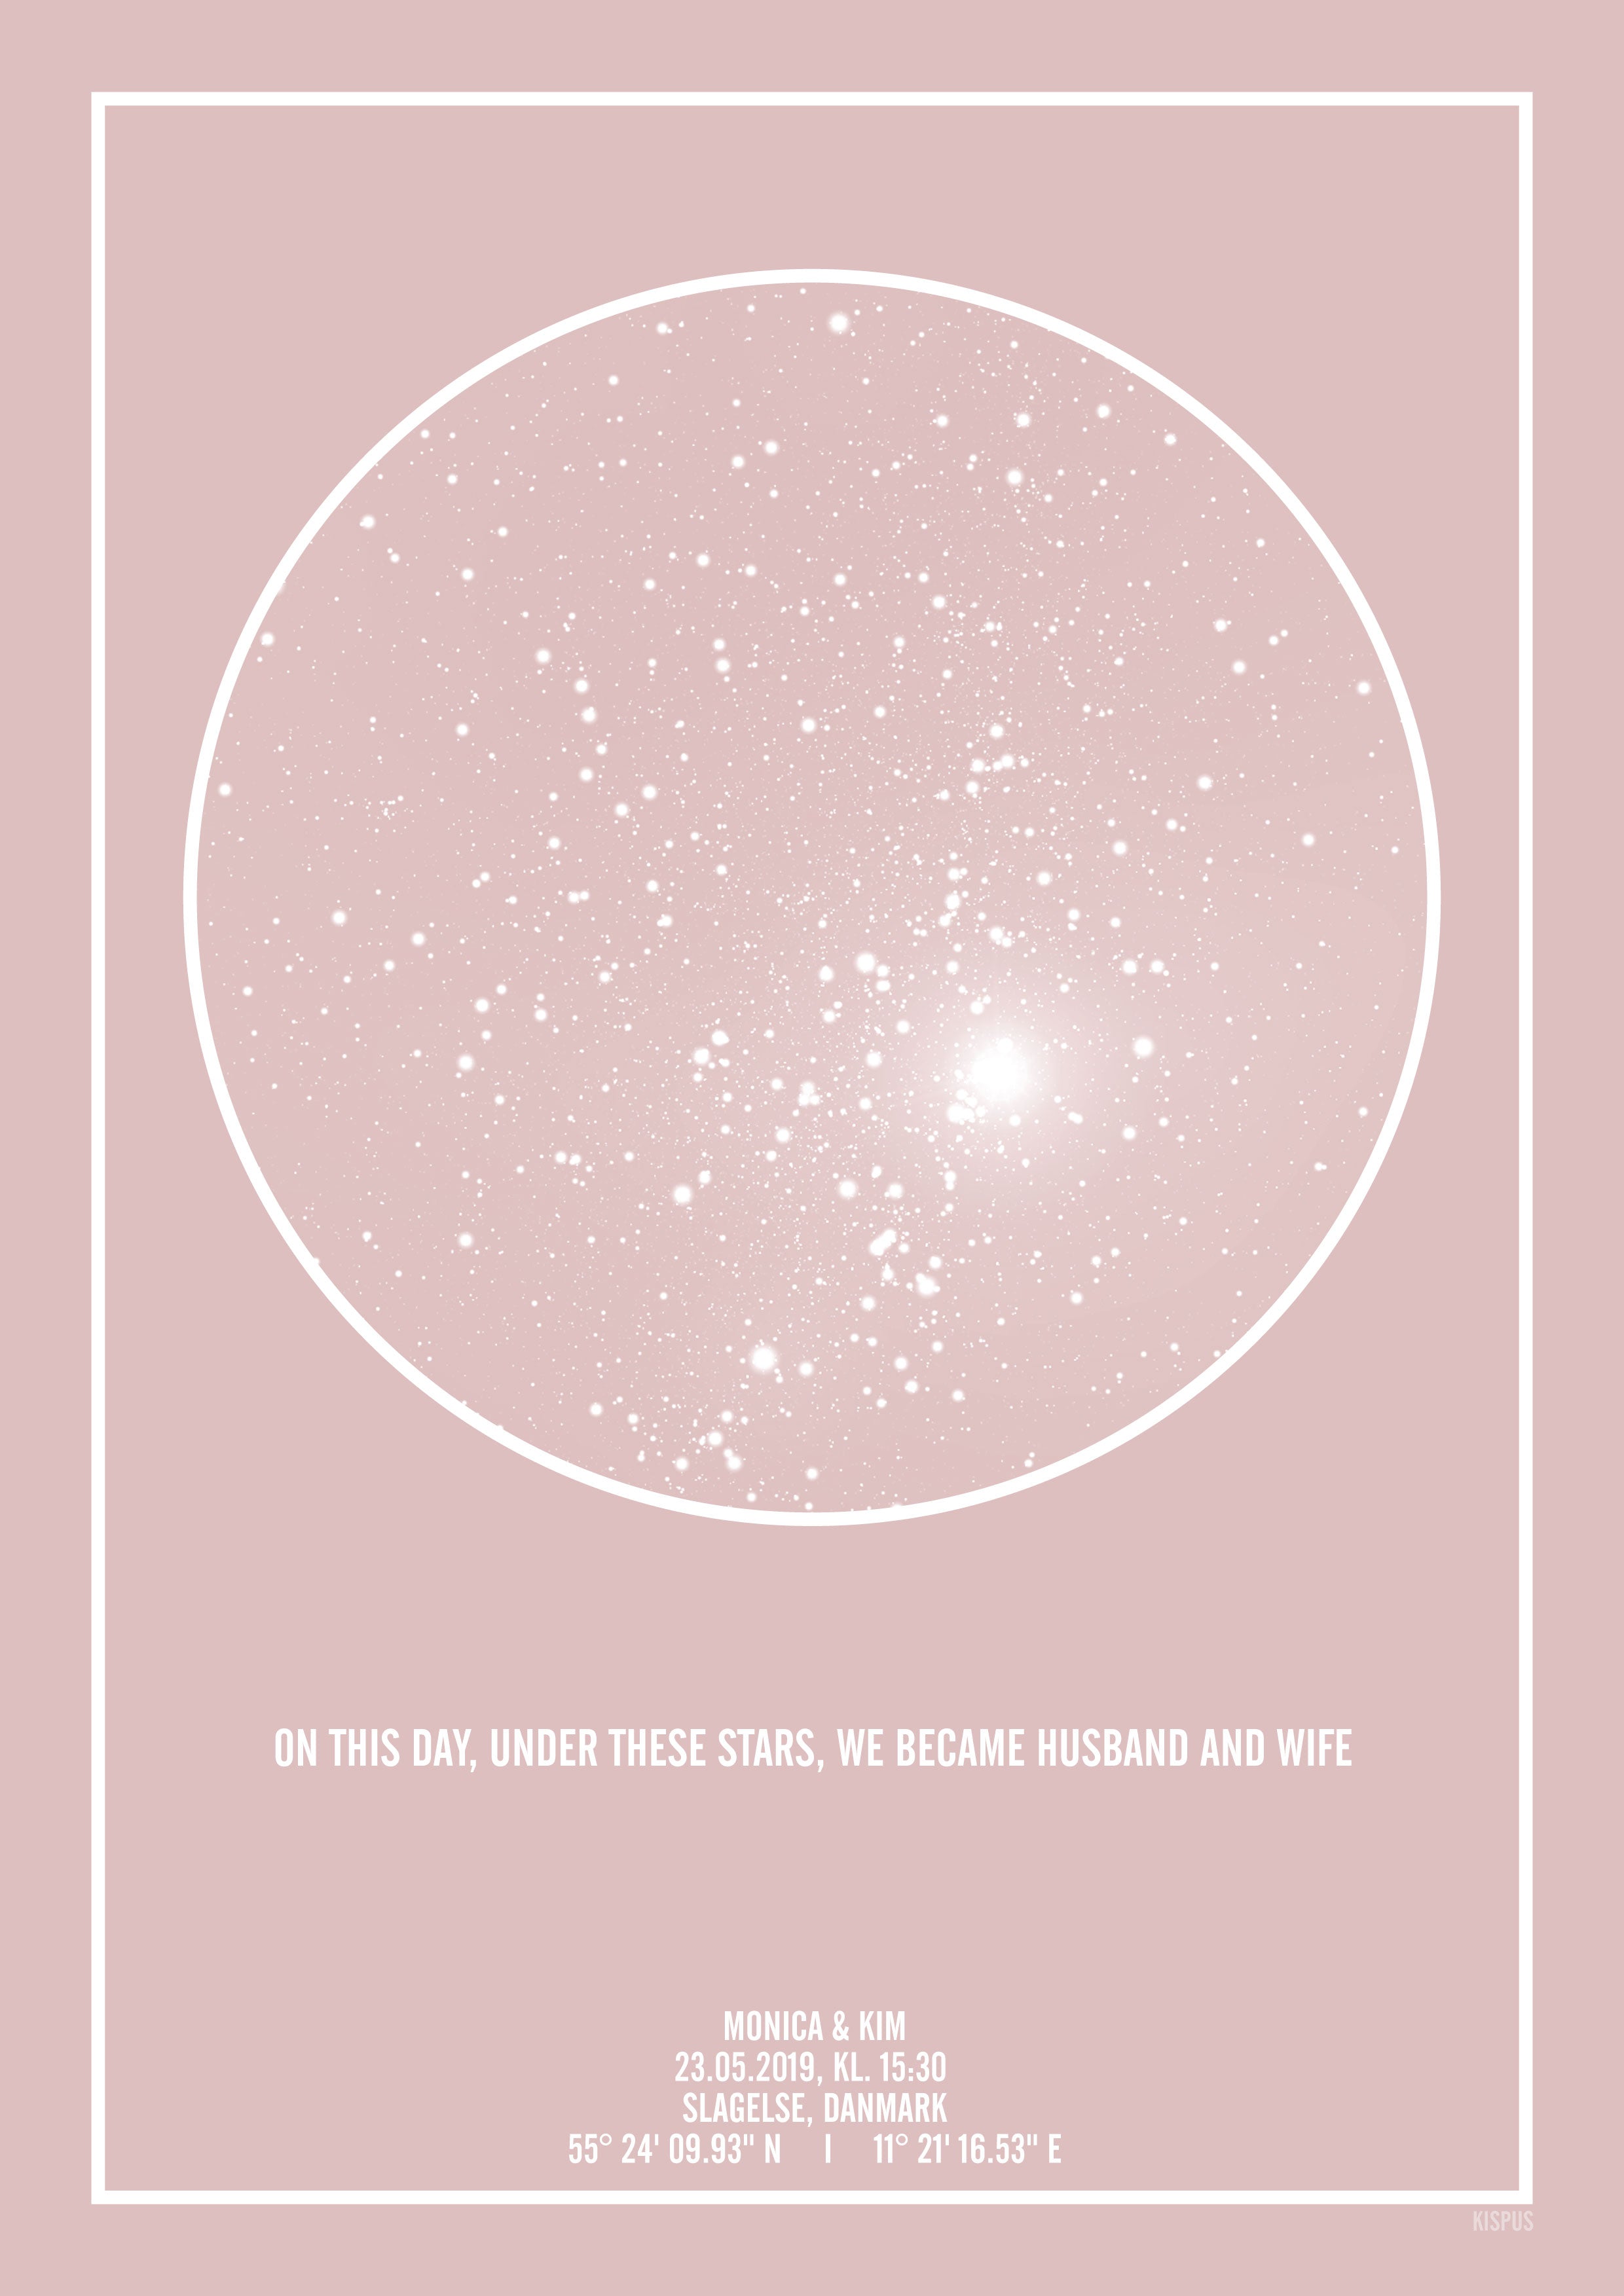 Verdens bedste bryllupsdags gaveide - en personlig stjernehimmel plakat